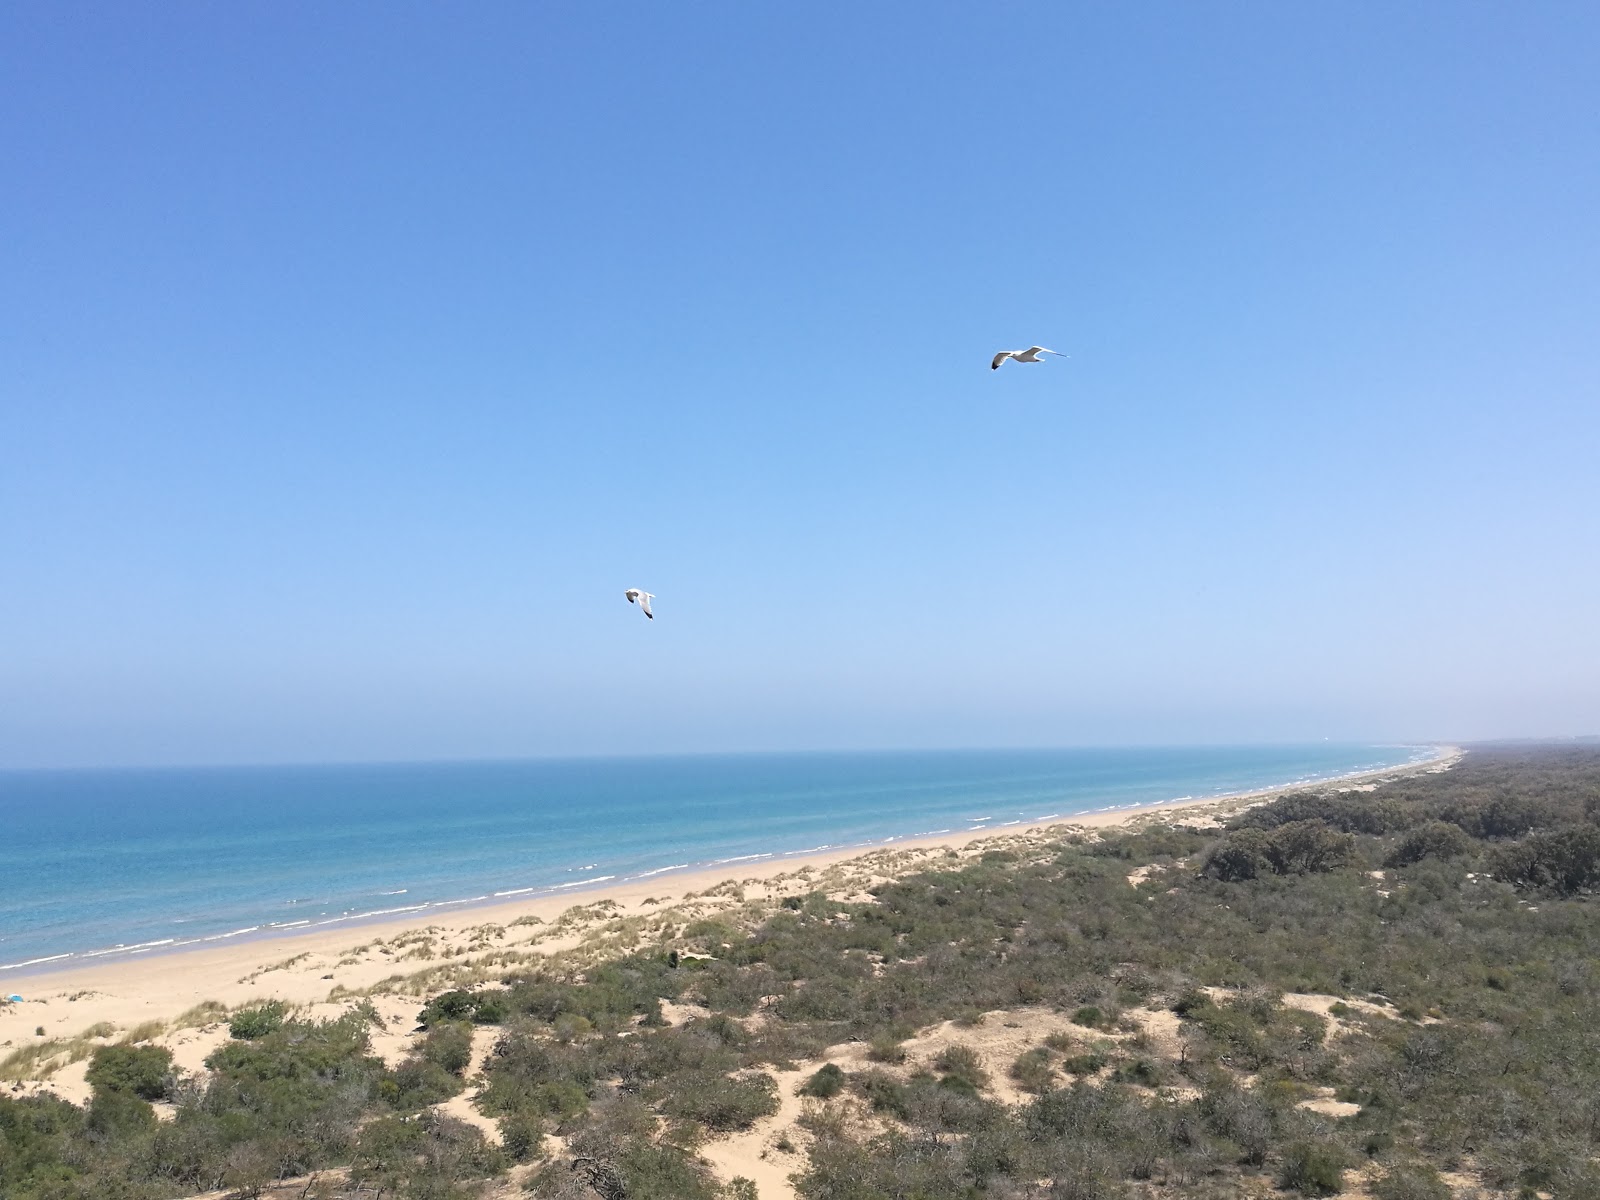 Plage Ras El-Ma'in fotoğrafı geniş plaj ile birlikte